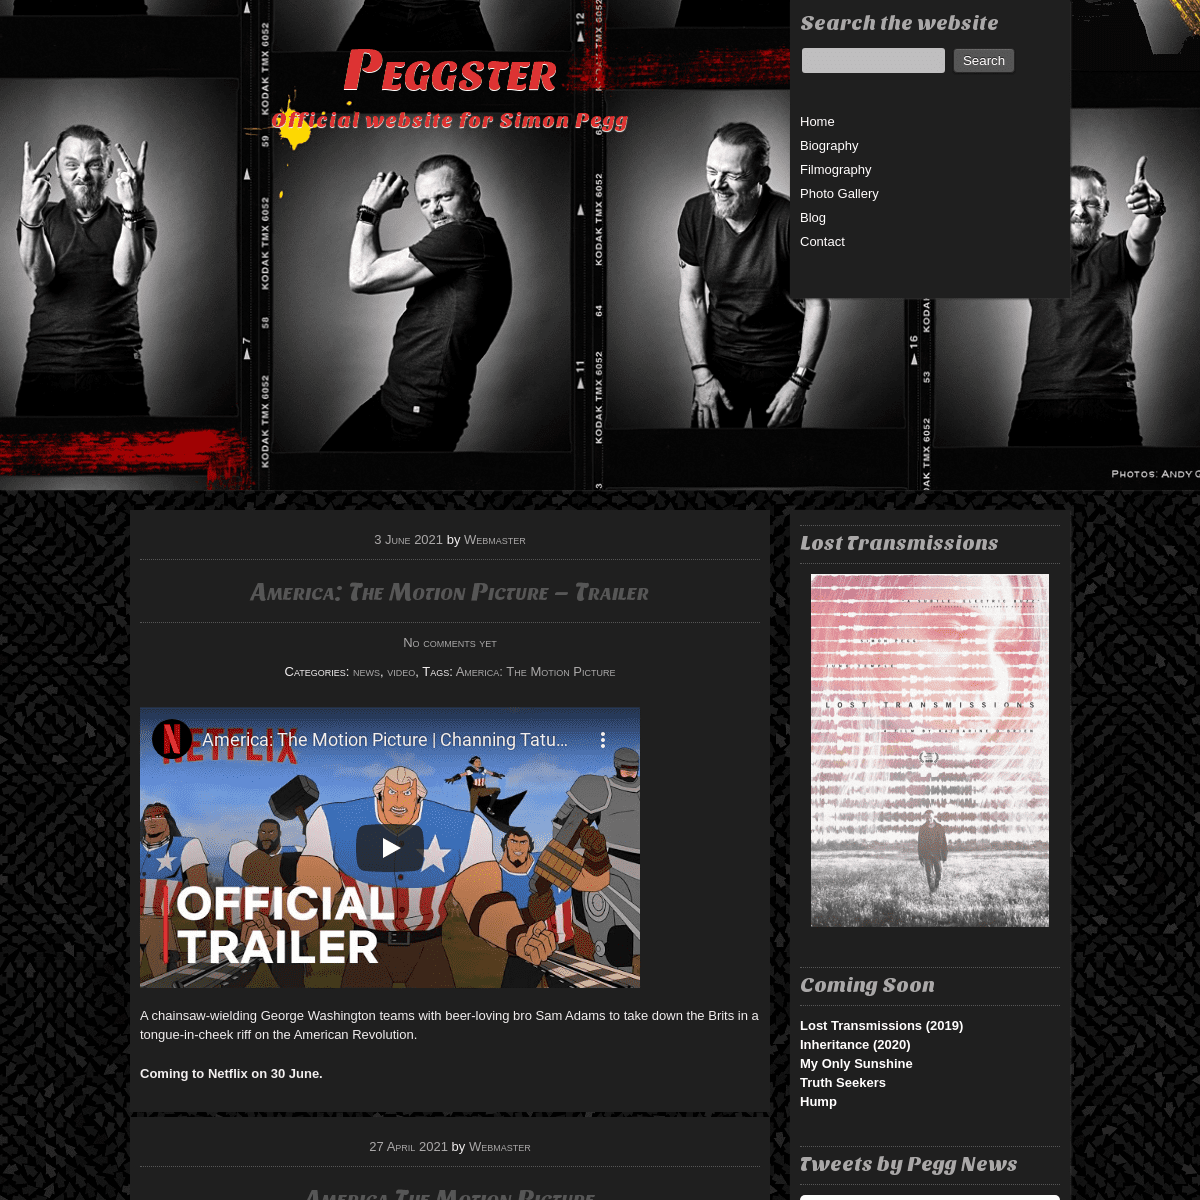 Peggster - Official website for Simon Pegg